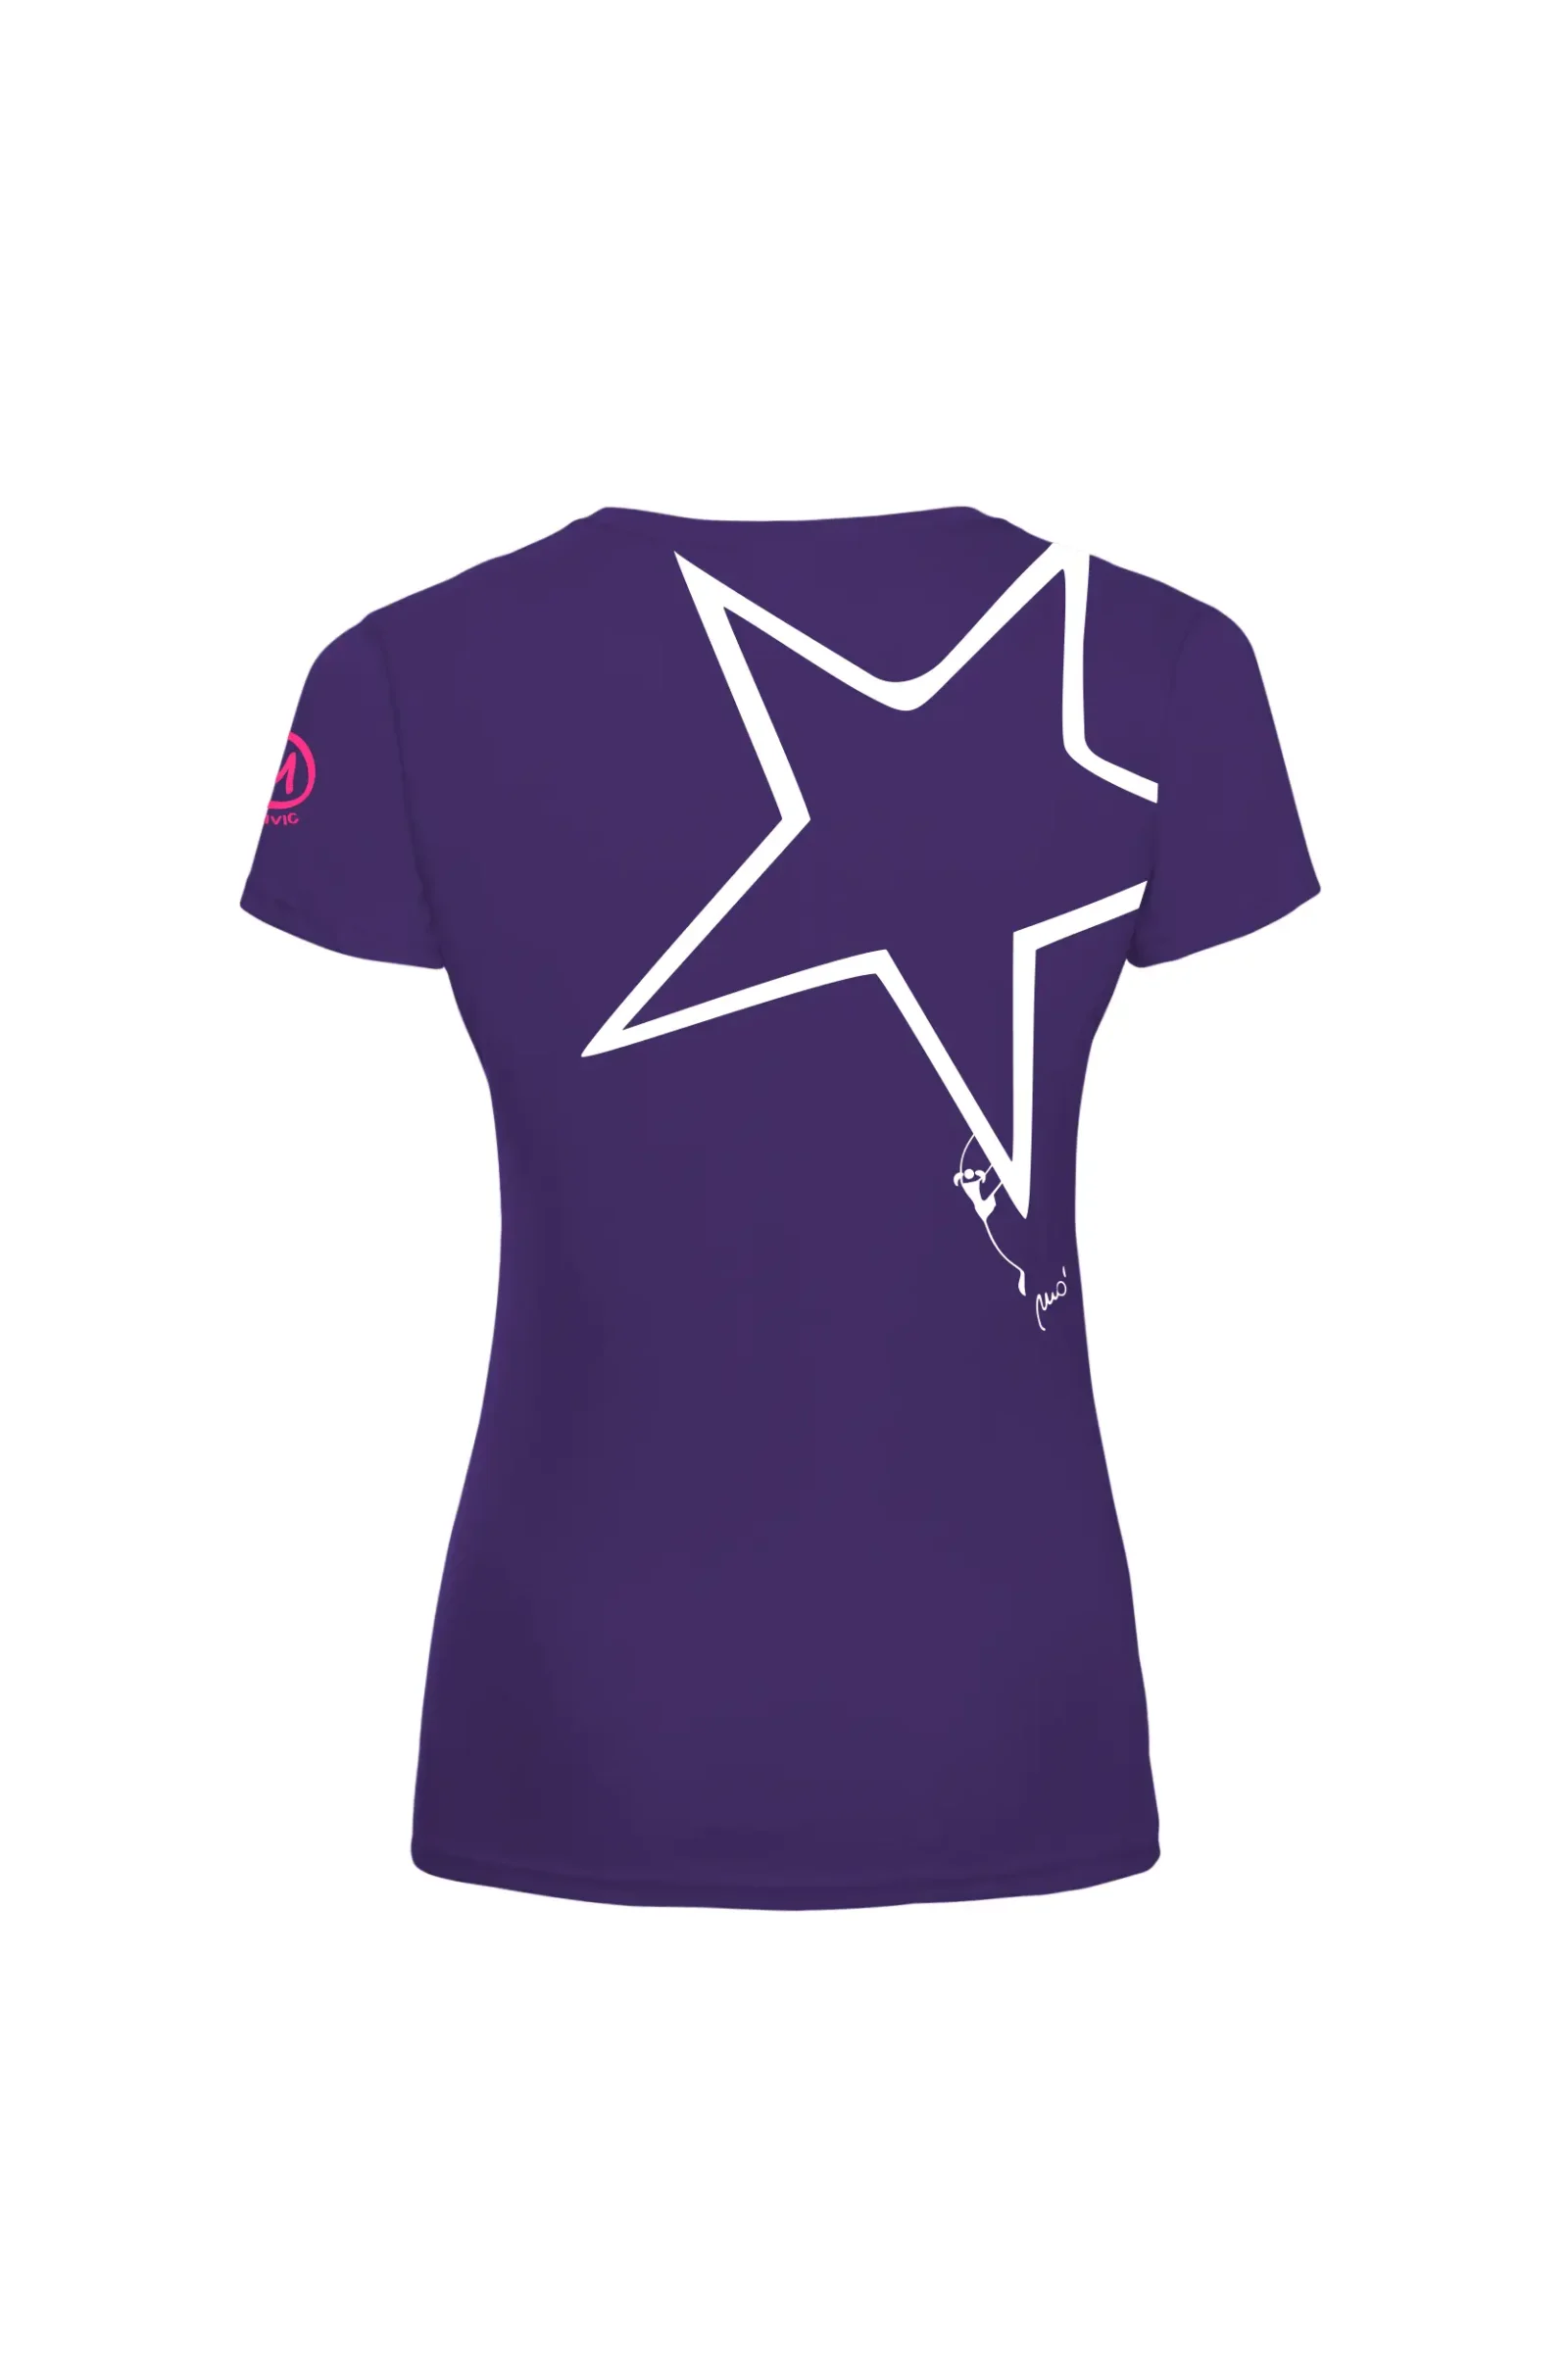 T-shirt escalade femme - coton violet - "Superstar" SHARON by MONVIC